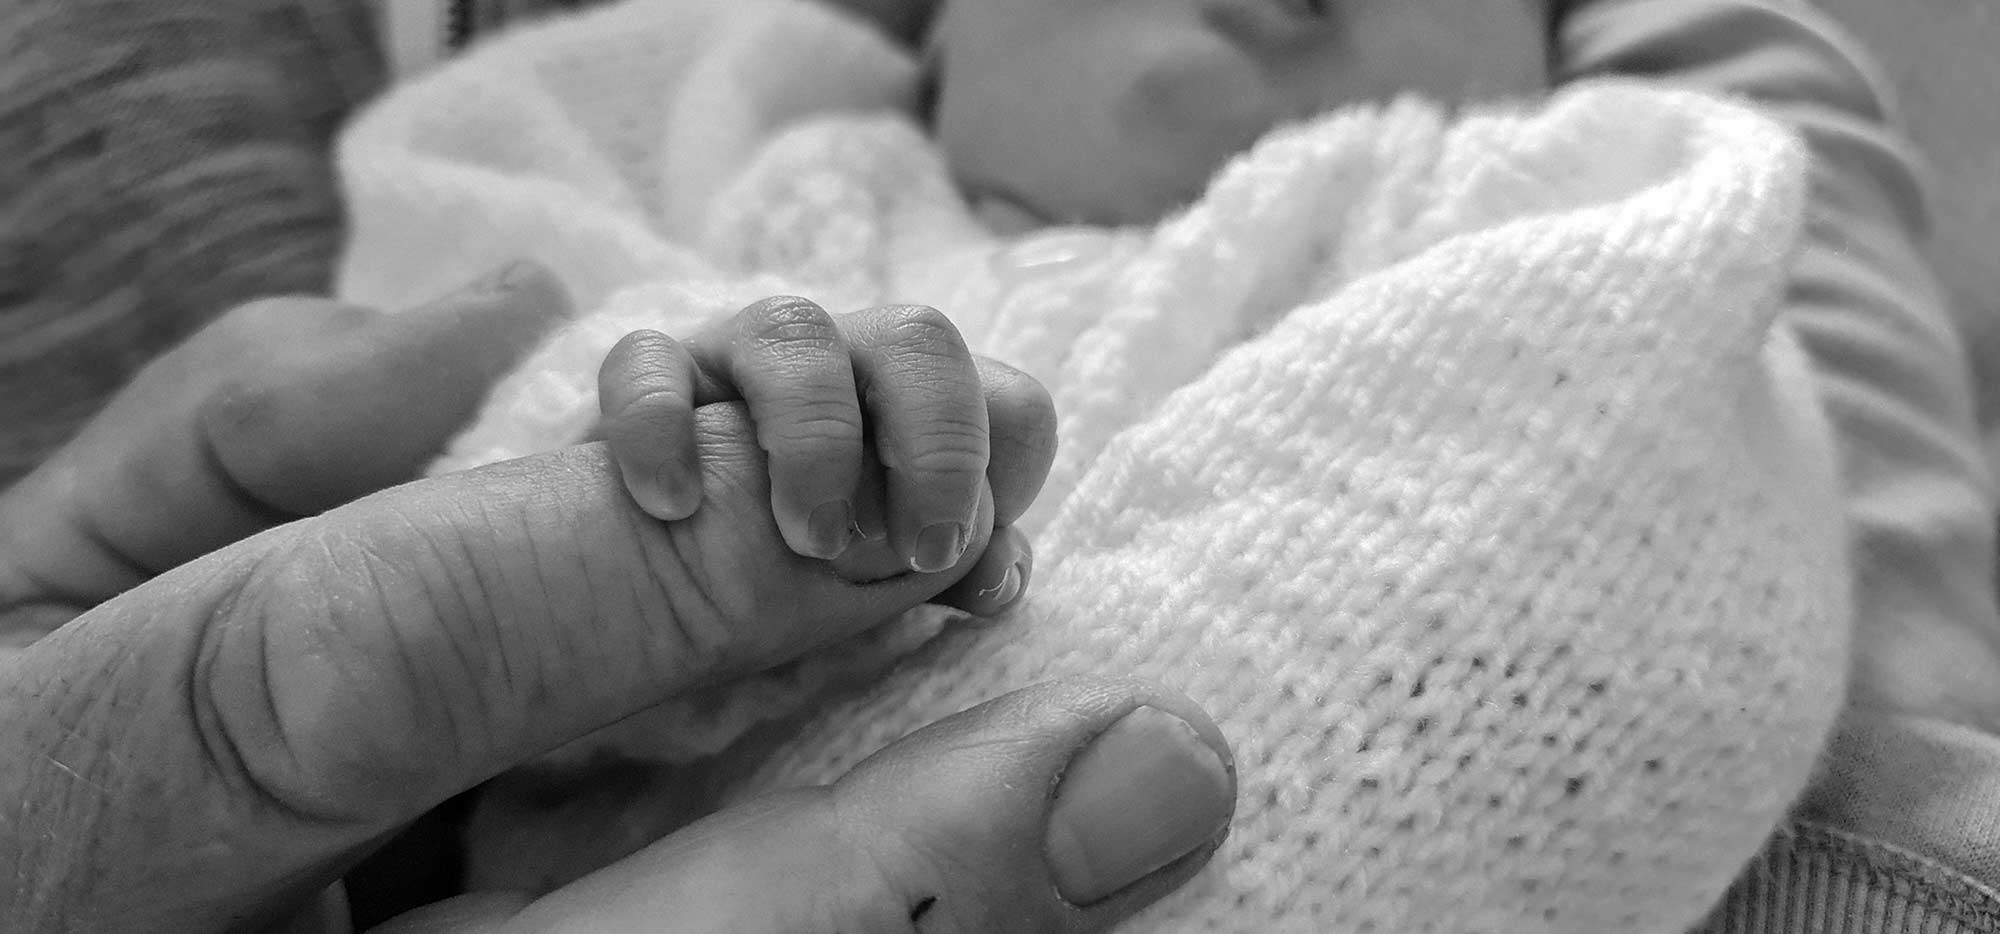 Newborn baby's hand gripping an adult's finger.